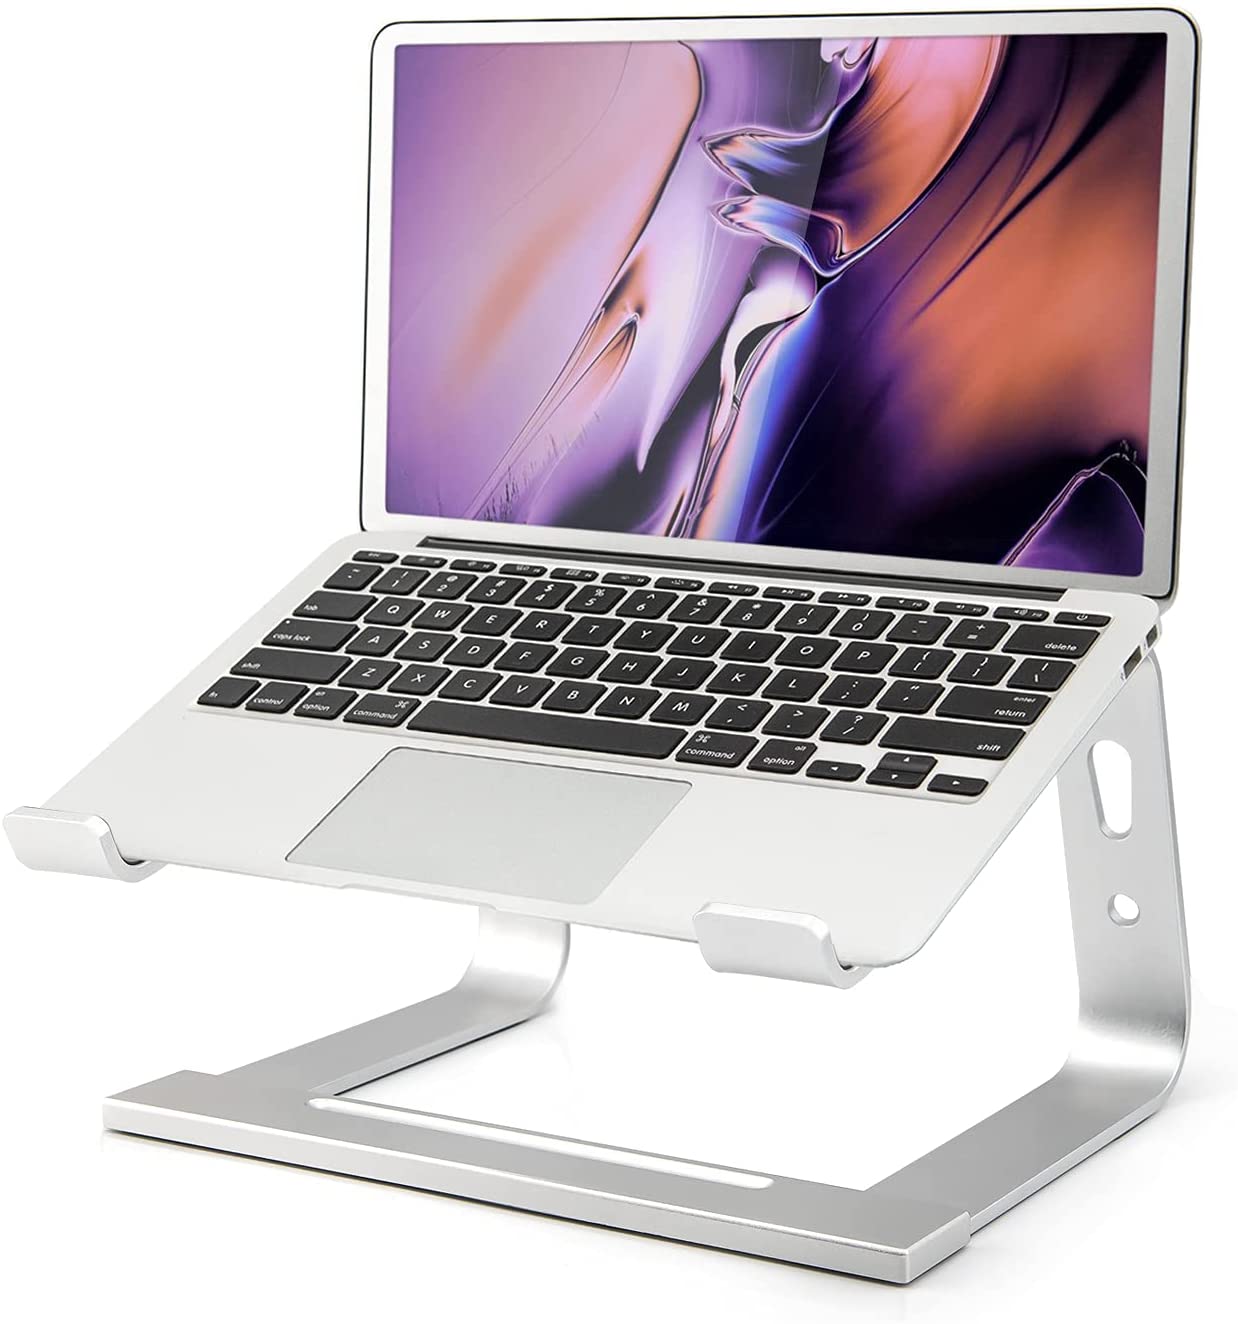 Laptop-Halter Kompatibel für 10-17 Zoll Laptops